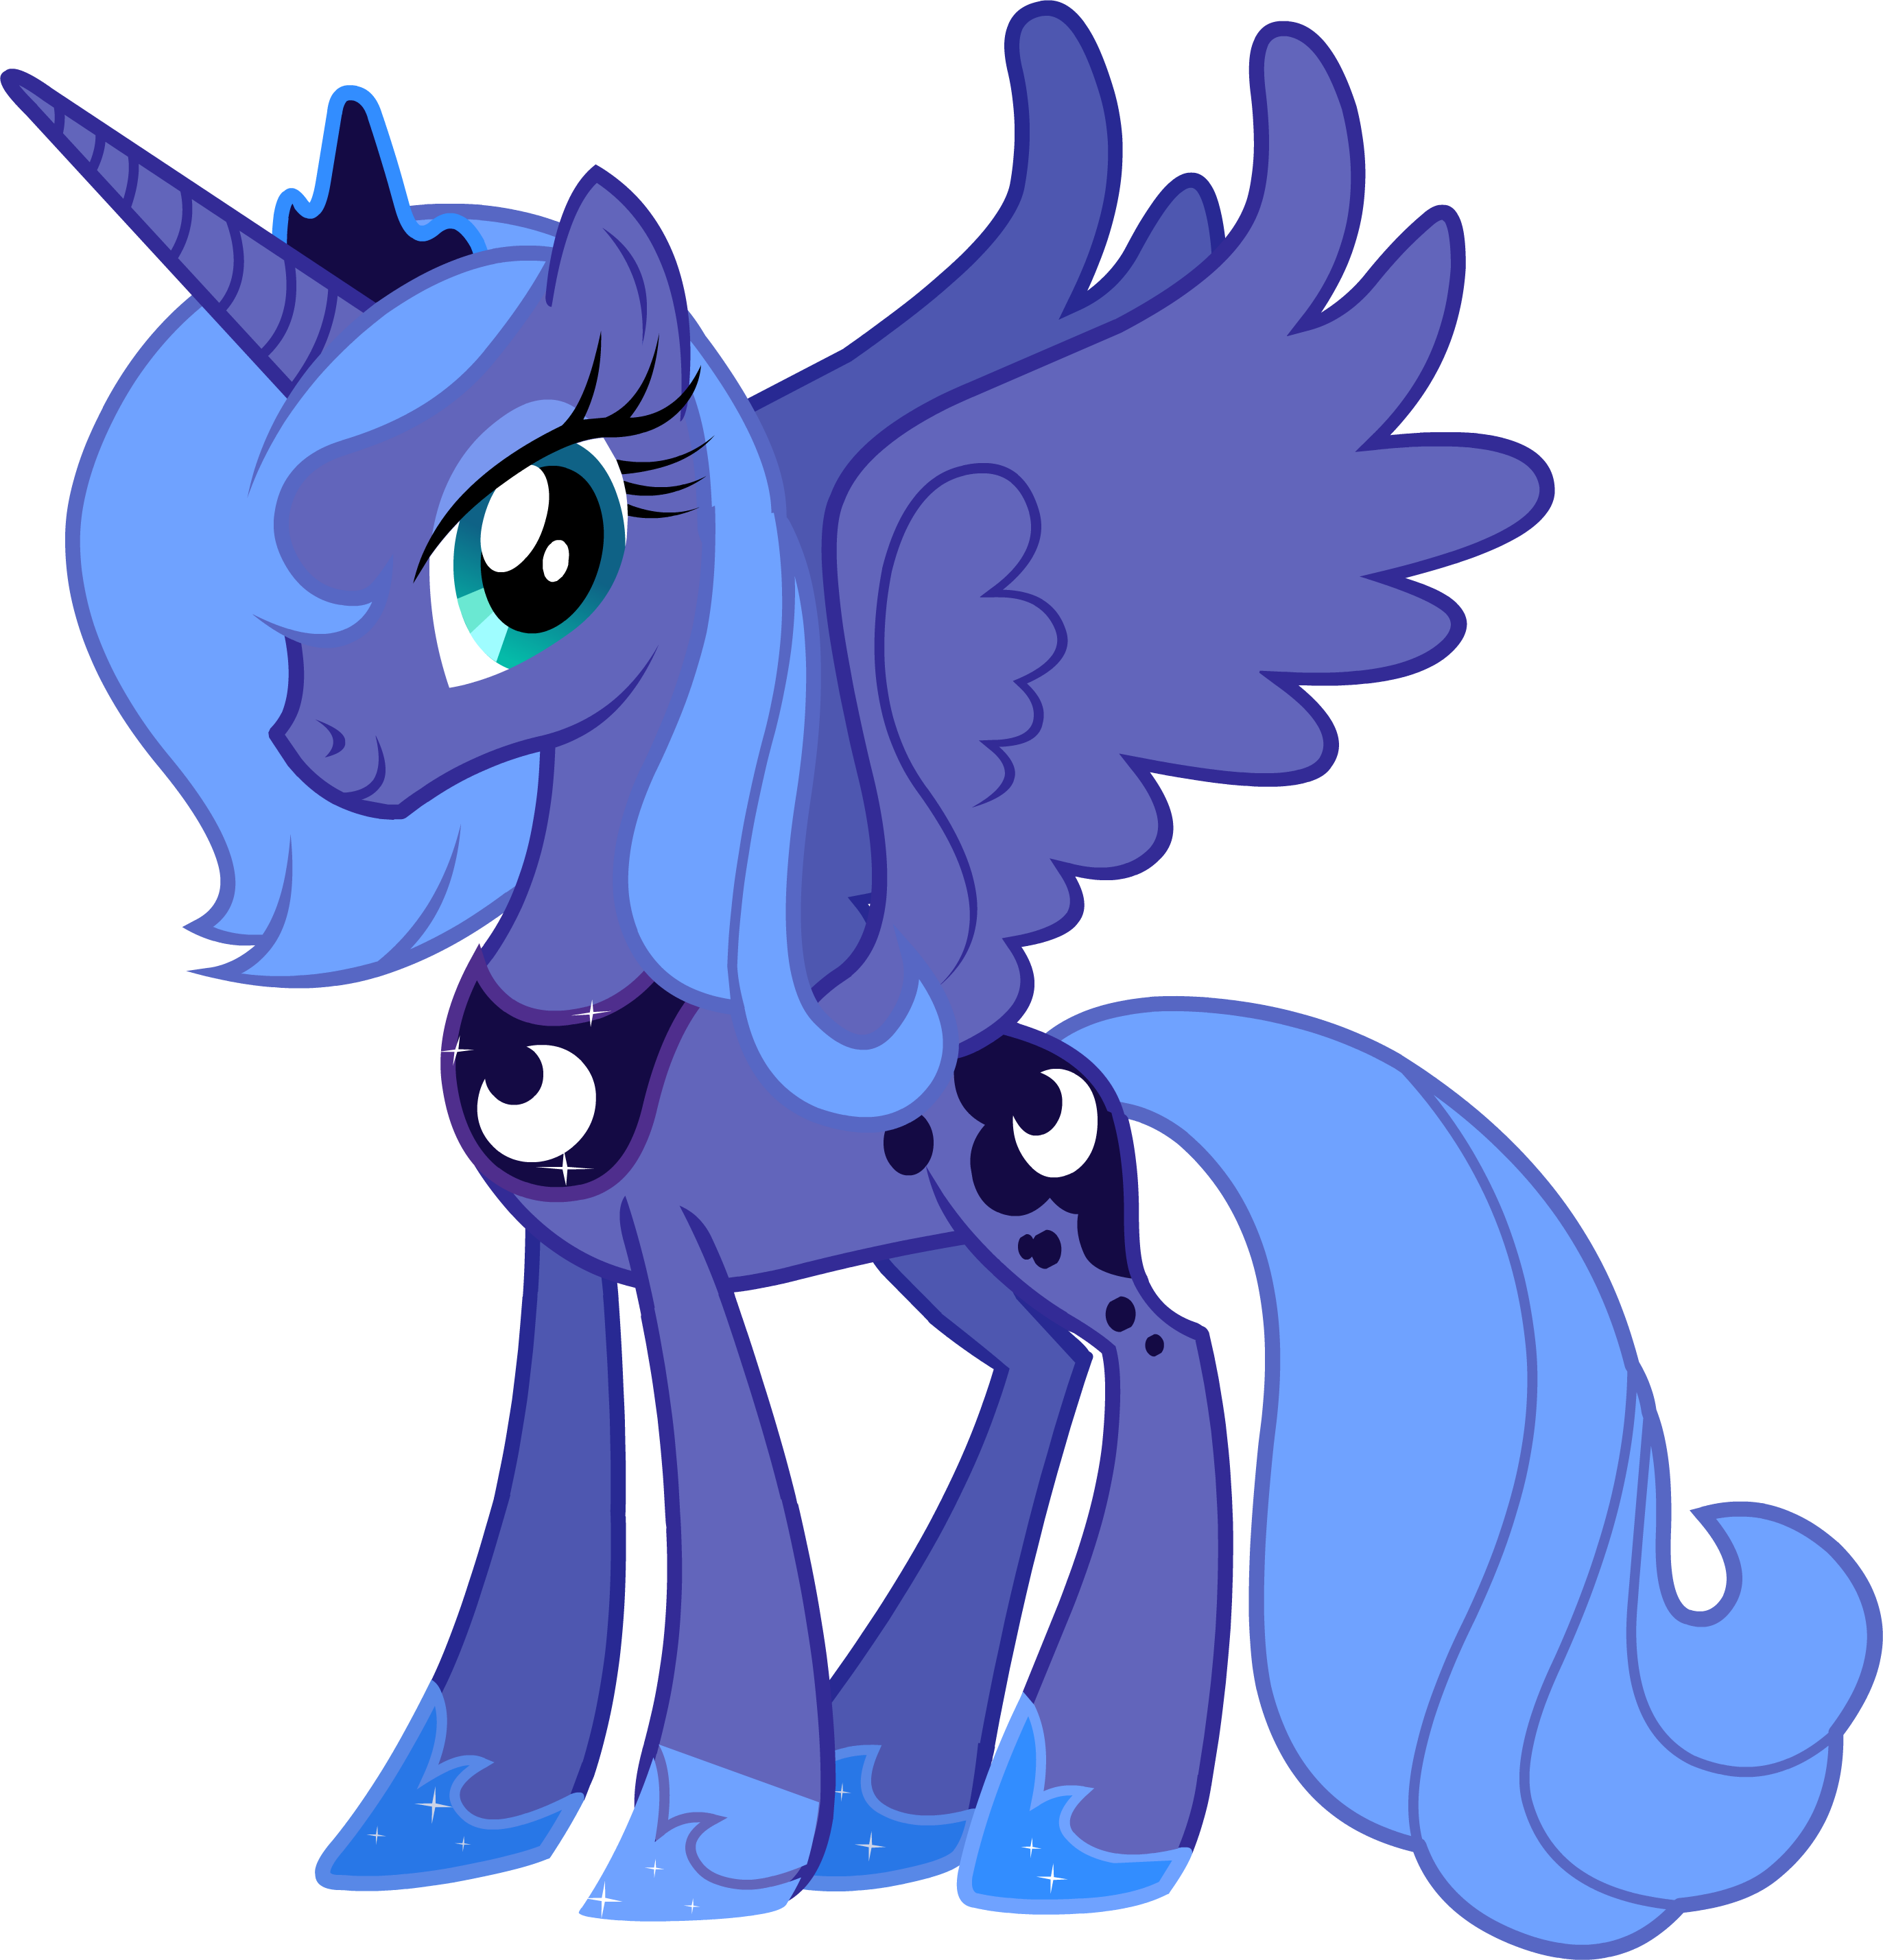 My little pony принцесса луна. Мой маленький пони принцесса Луна. Аликорн Луна. My little Pony Luna. My little Pony Princess Luna.